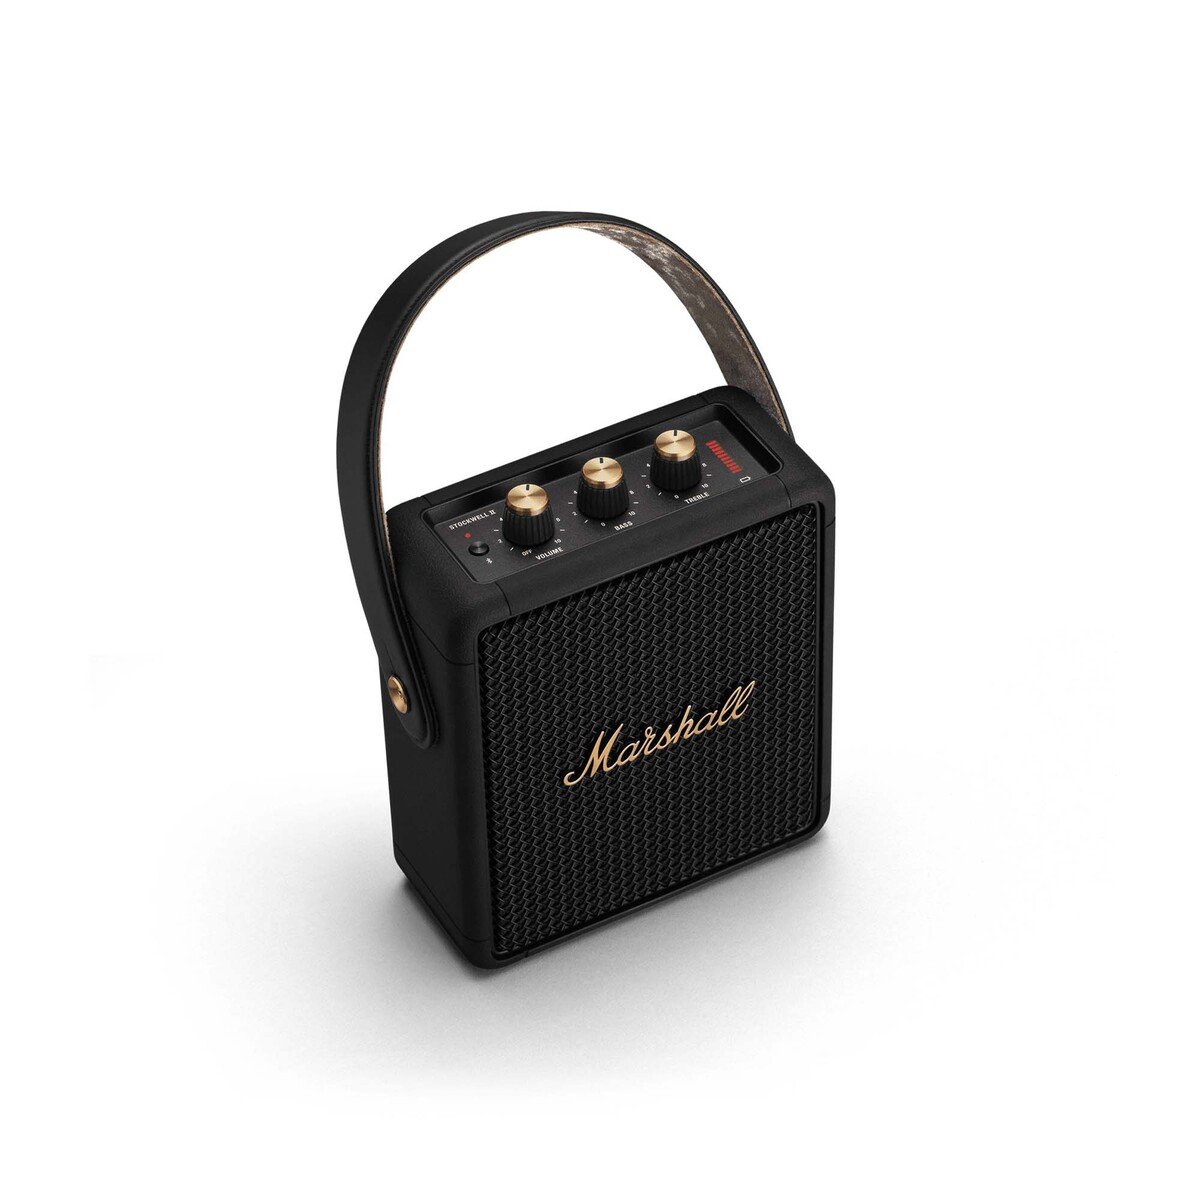 Marshall Portable Bluetooth Speaker STOCKWELL  II Black And Brass